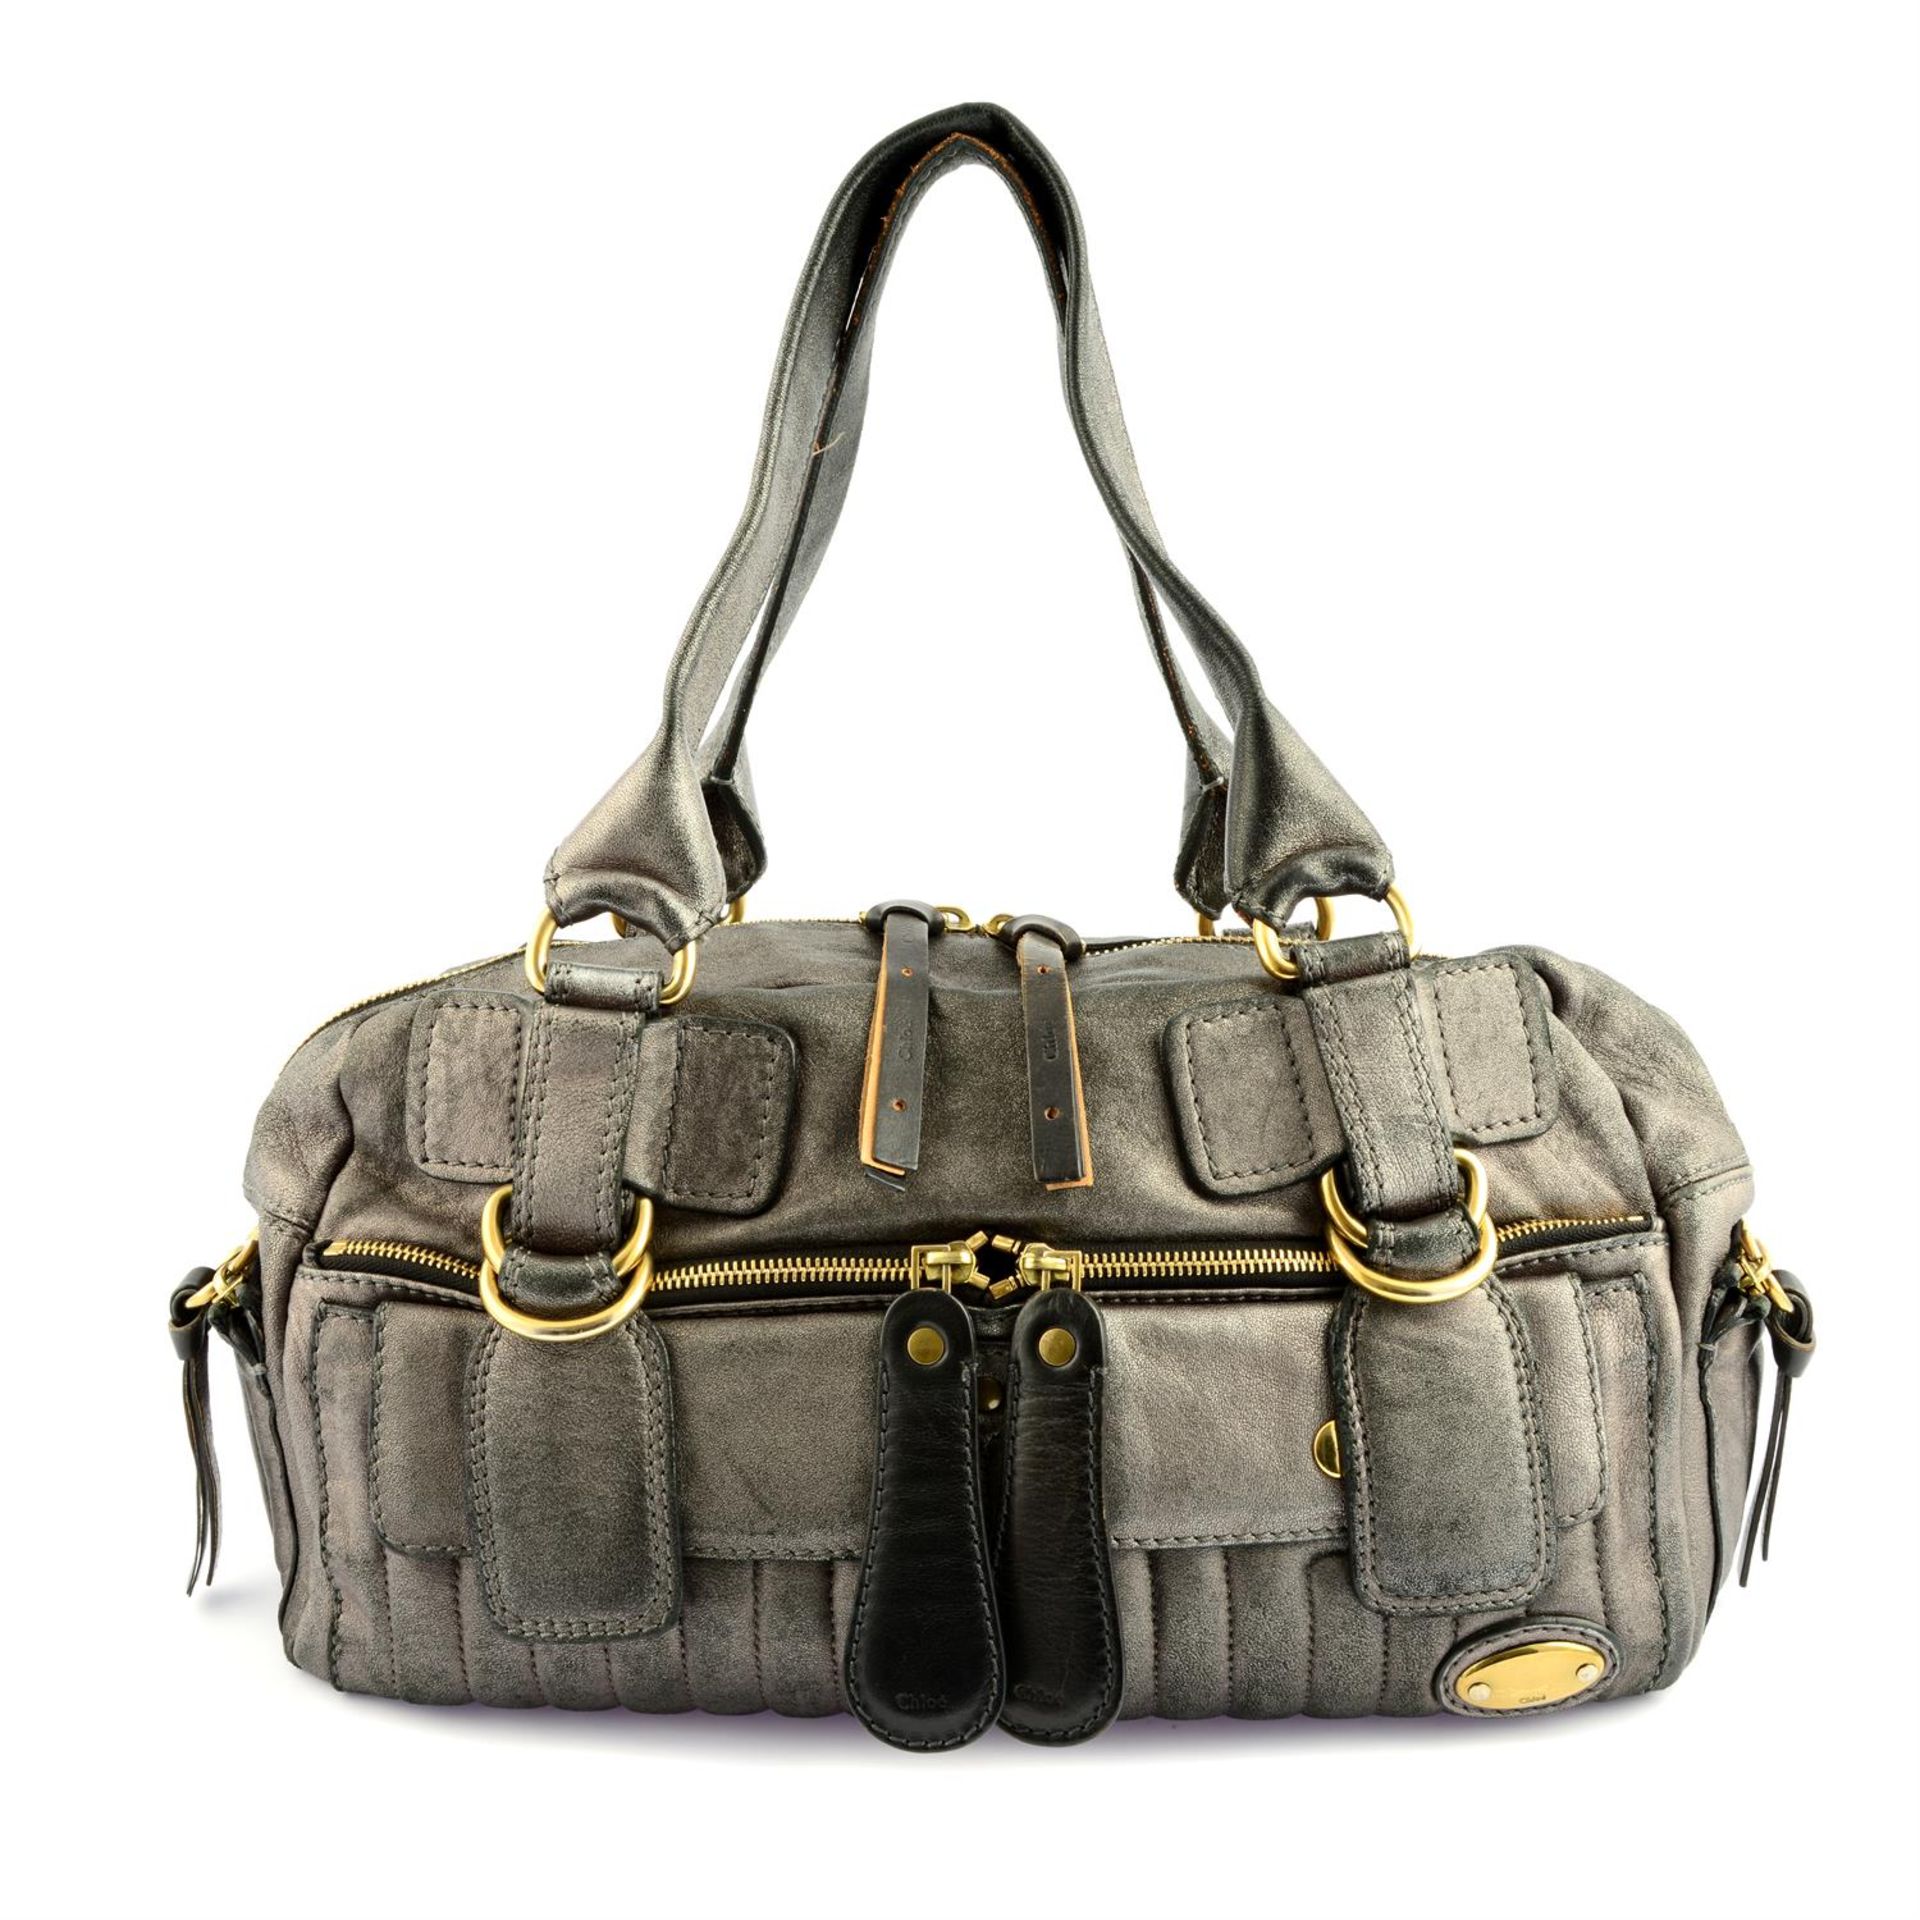 CHLOÉ- a gunmetal leather Bay handbag.